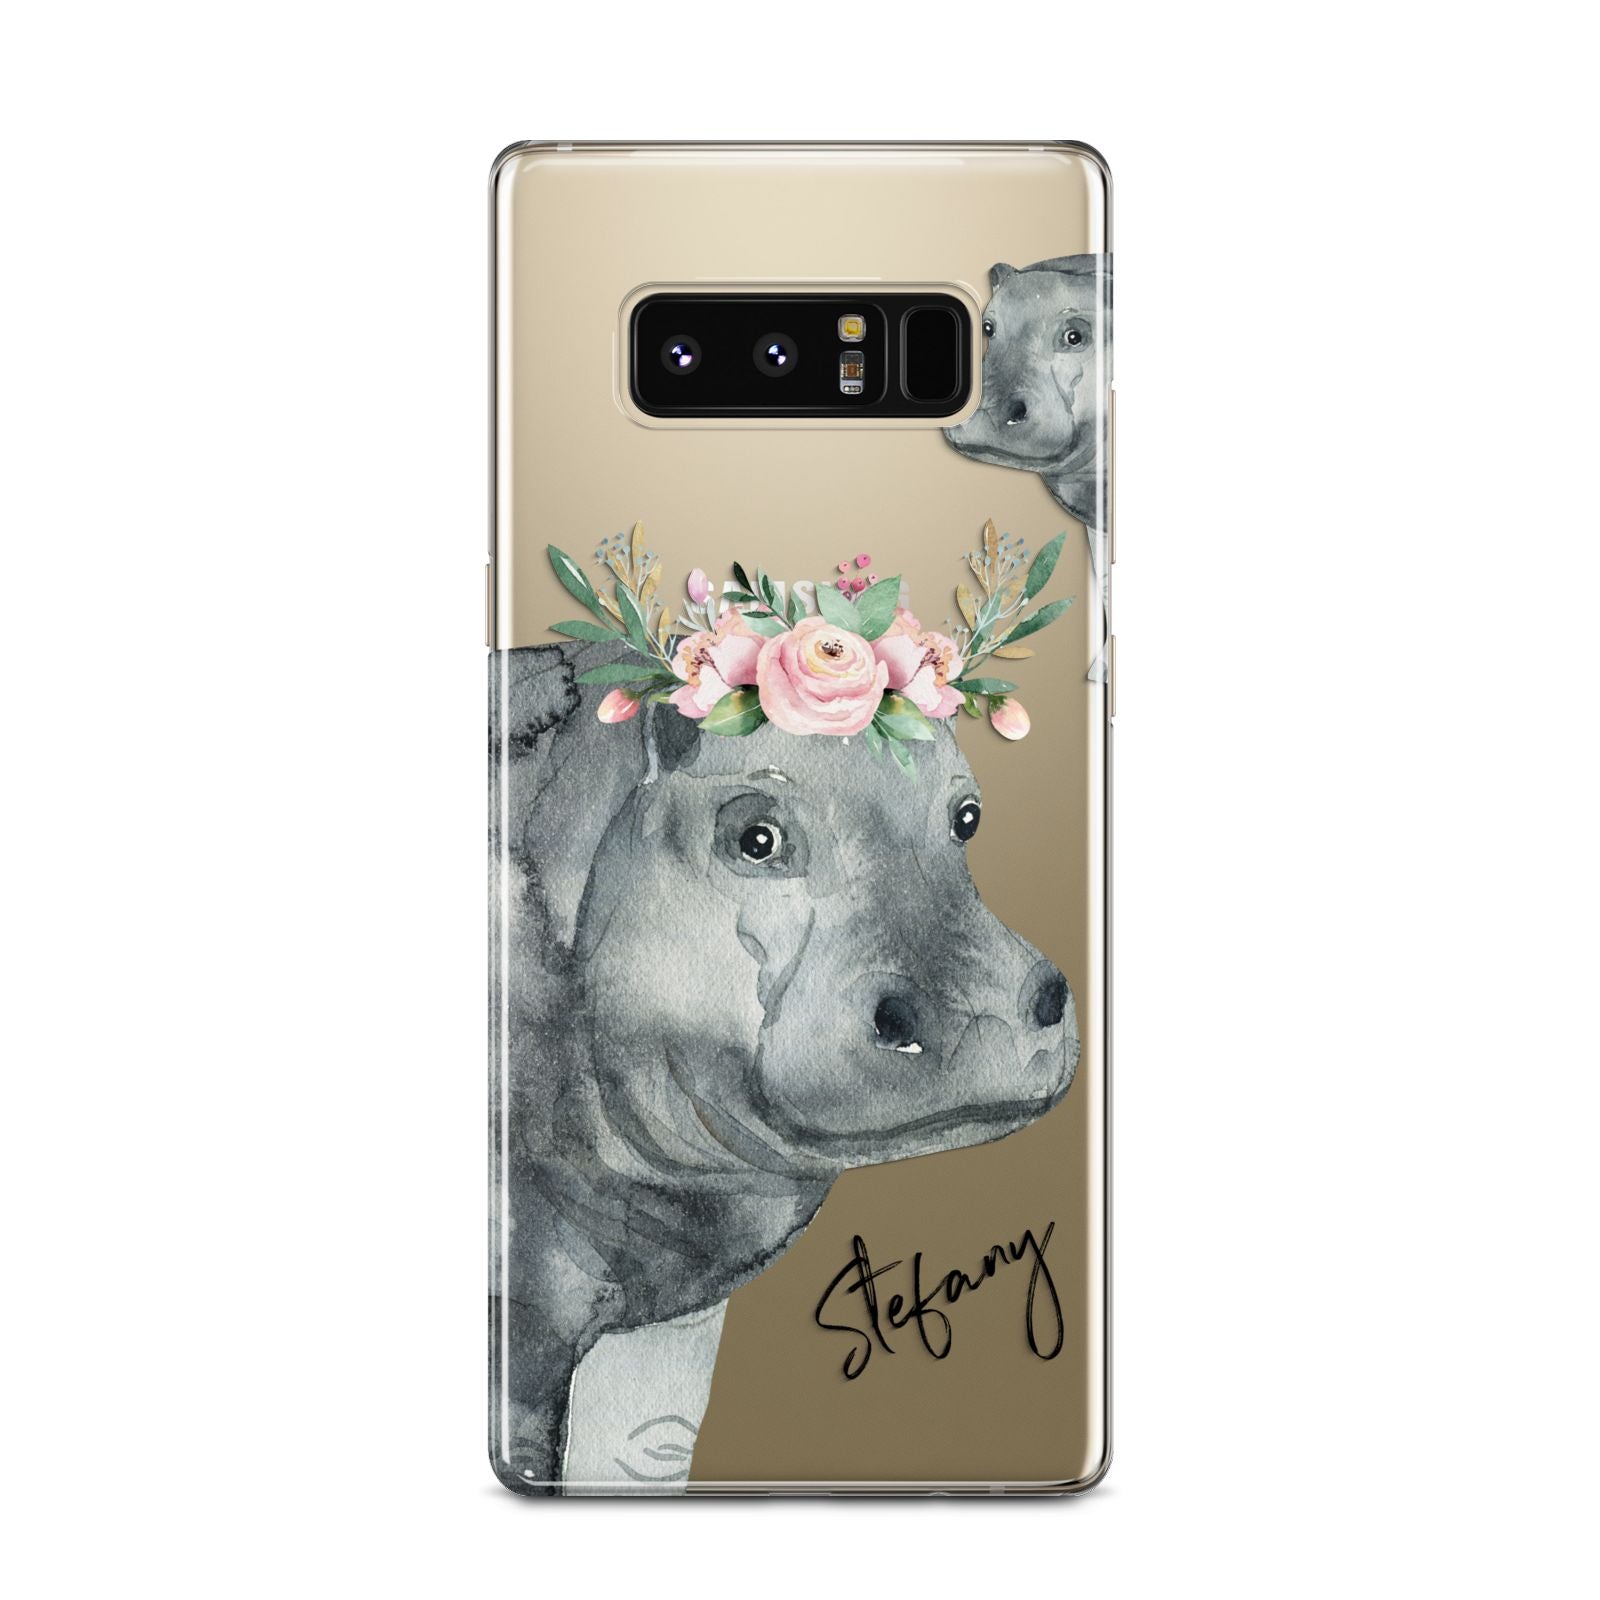 Personalised Hippopotamus Samsung Galaxy Note 8 Case